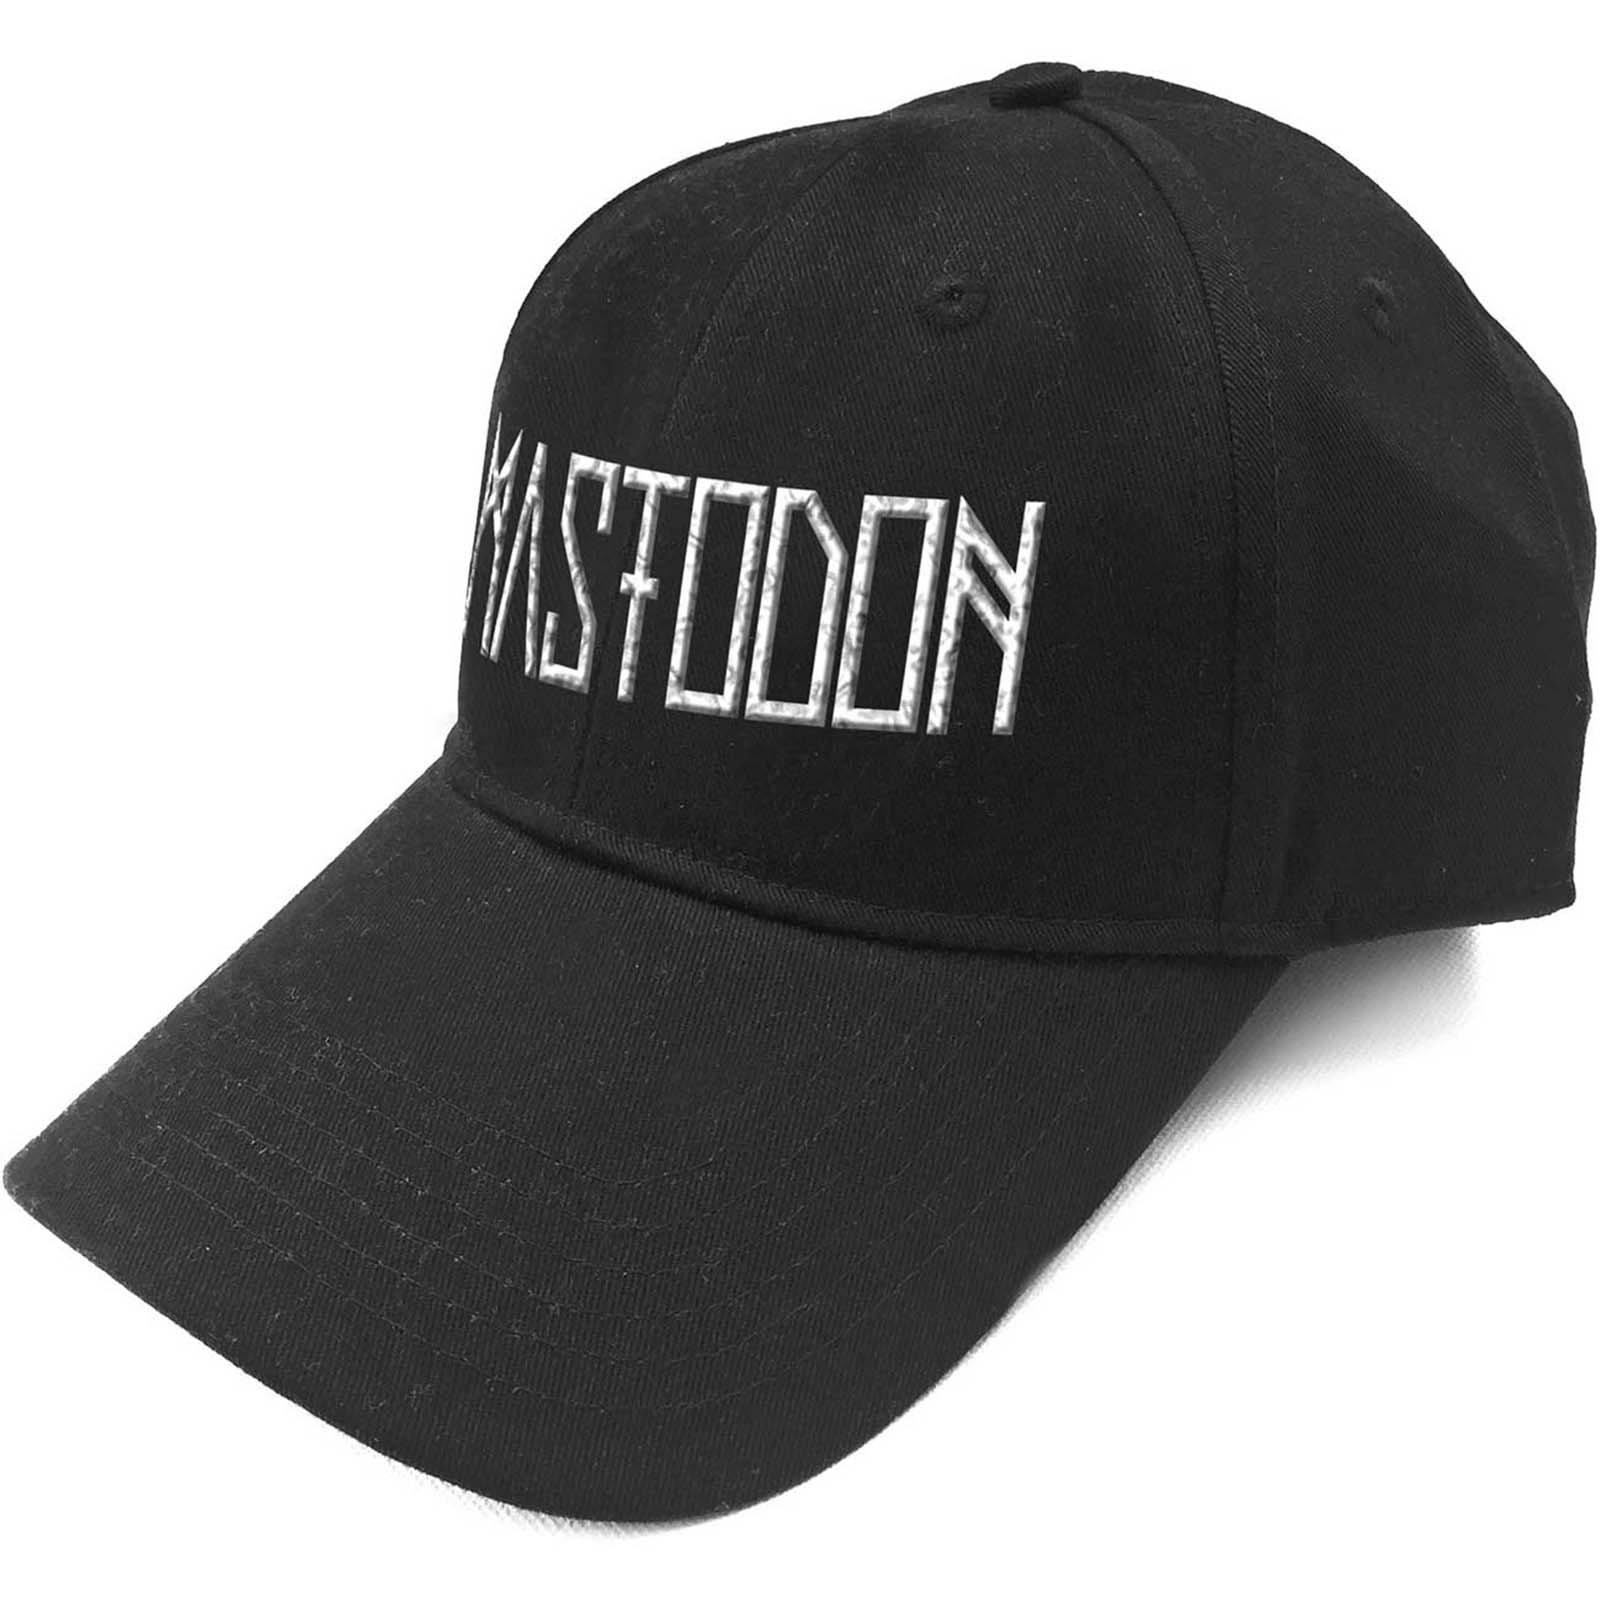 Бейсбольная кепка с ремешком на спине и логотипом Sonic Silver Band Mastodon, черный mastodon mastodon stairway to nick john limited 10